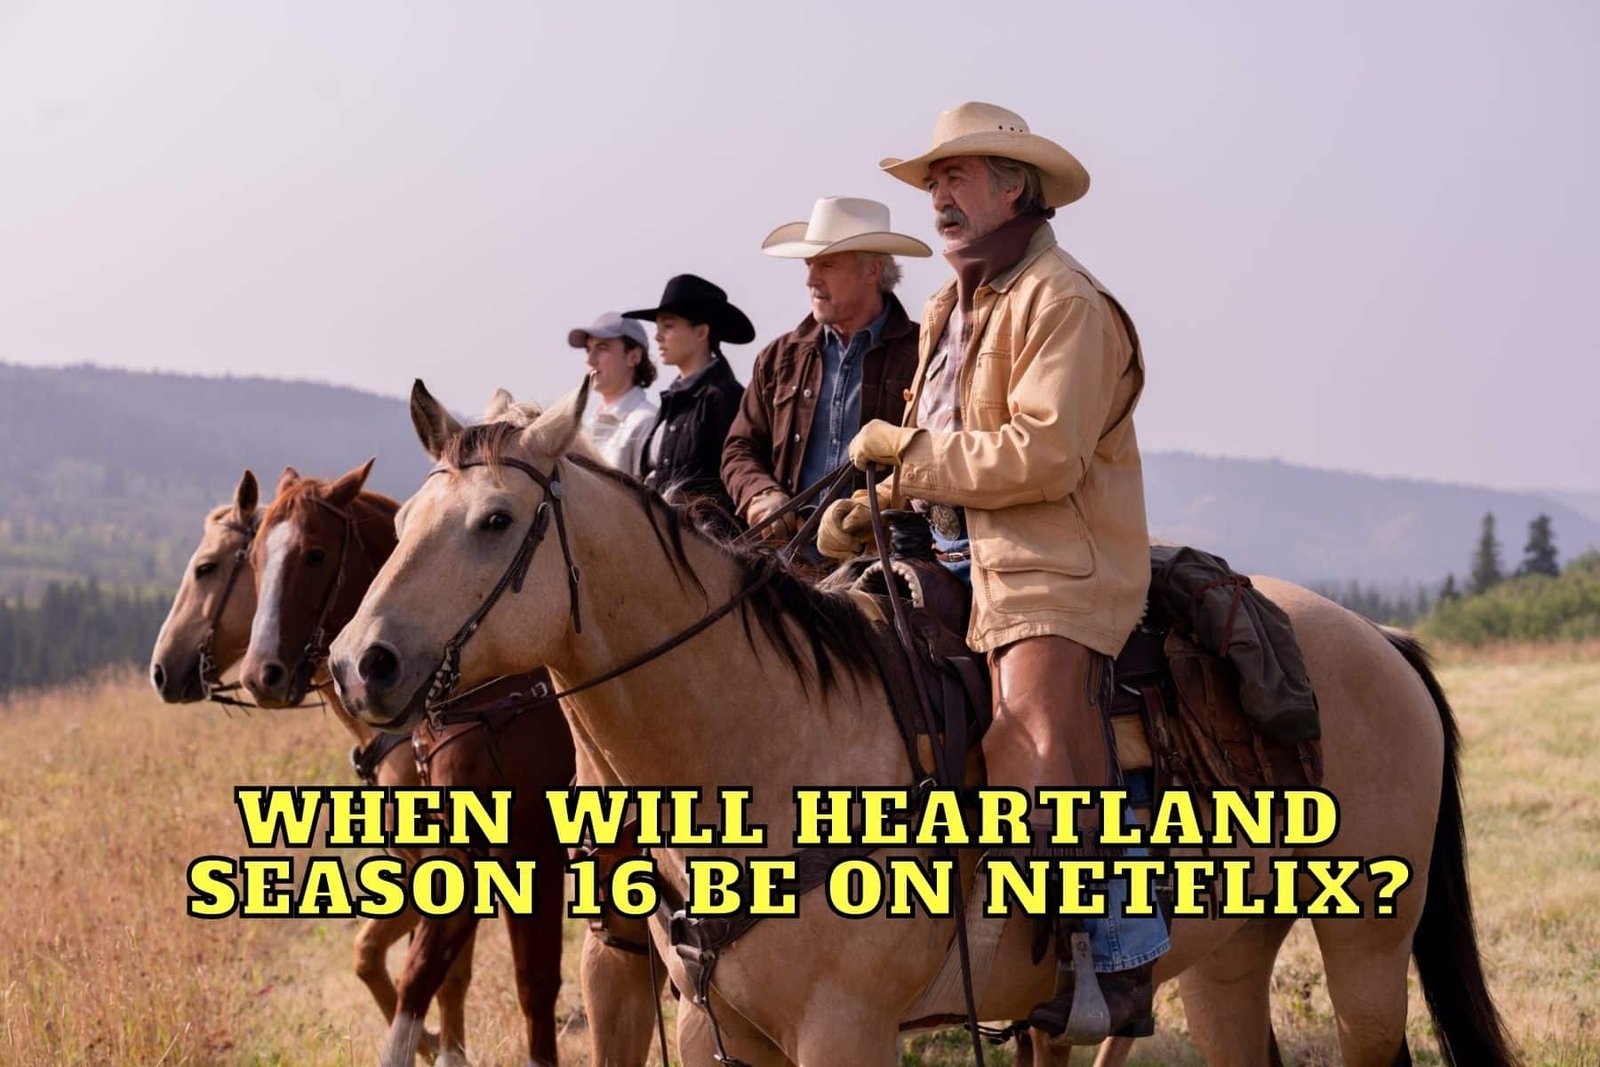 When Will Heartland Season 16 Be on Netflix?